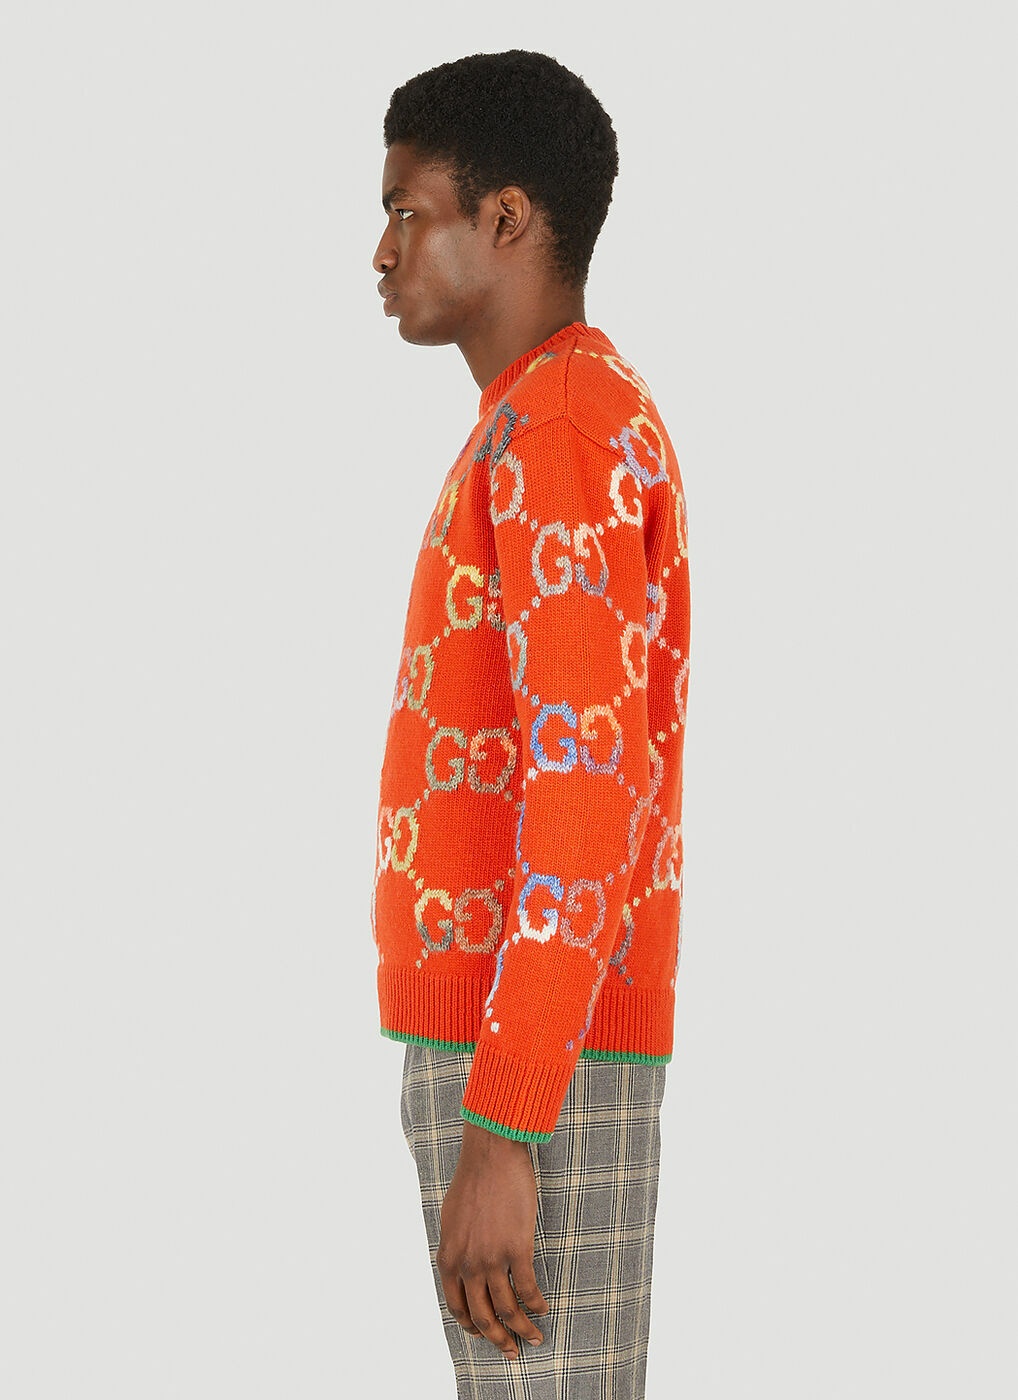 GG Jacquard Knit Sweater in Orange Gucci